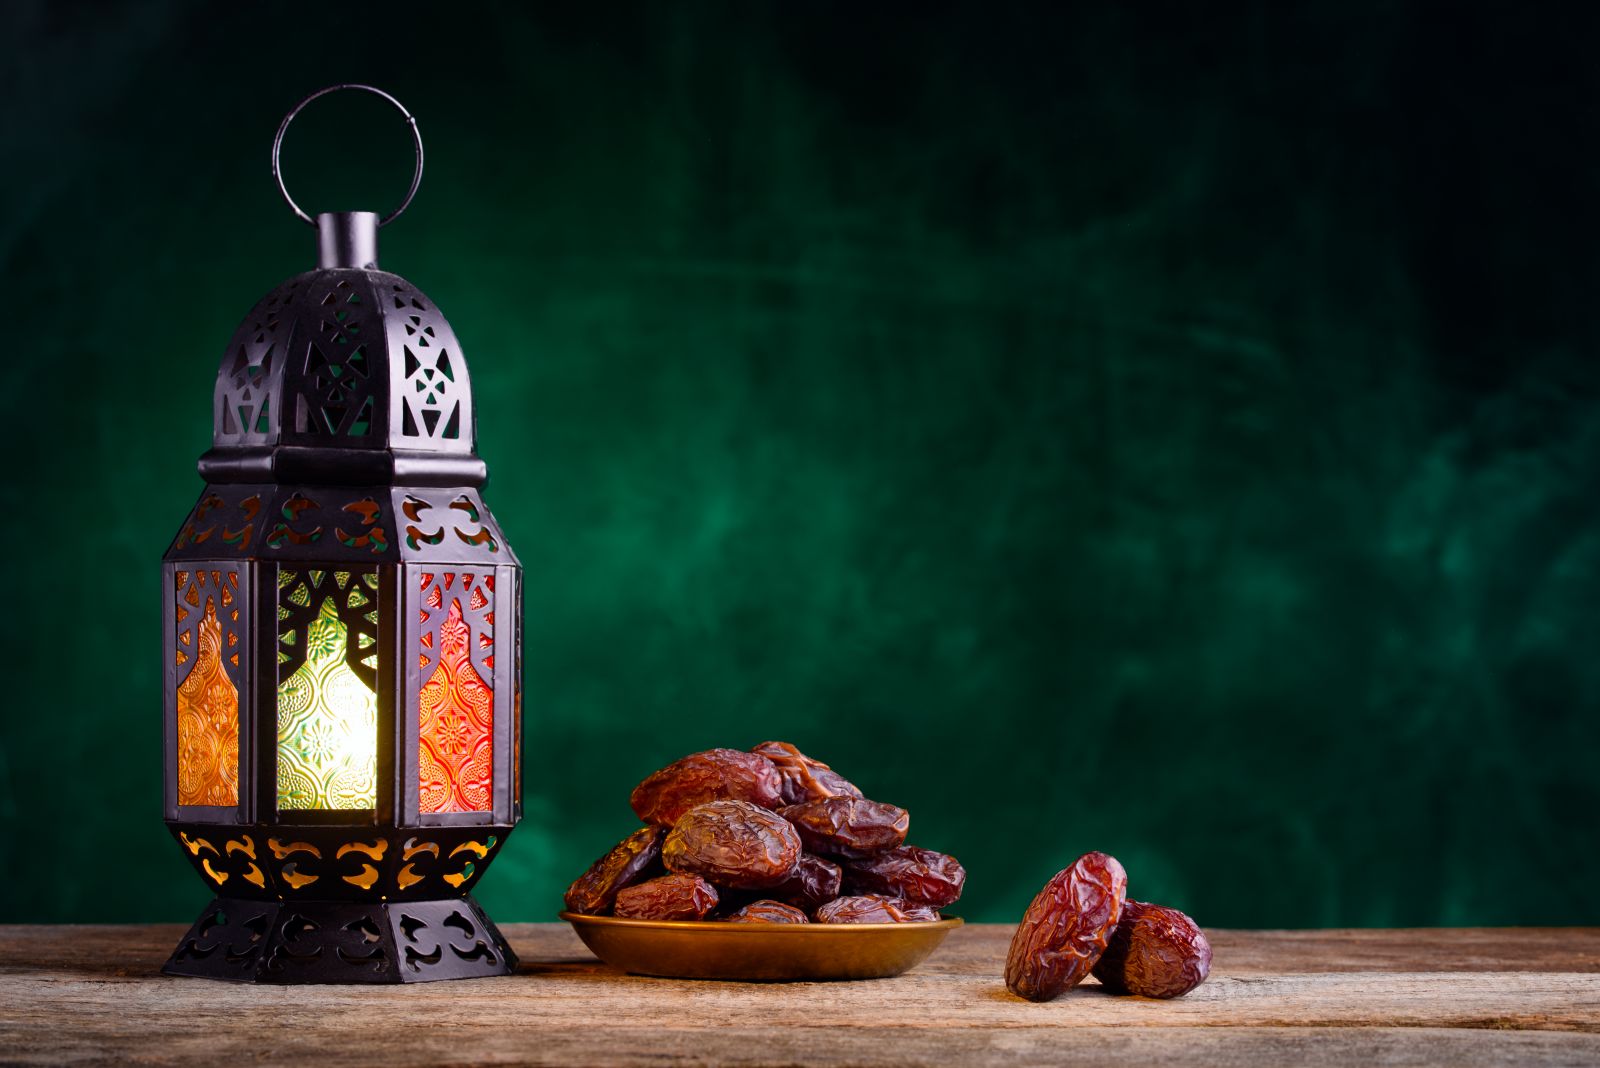 Ramazanın 25-ci GÜNÜ: İmsak, iftar vaxtları, günün duası